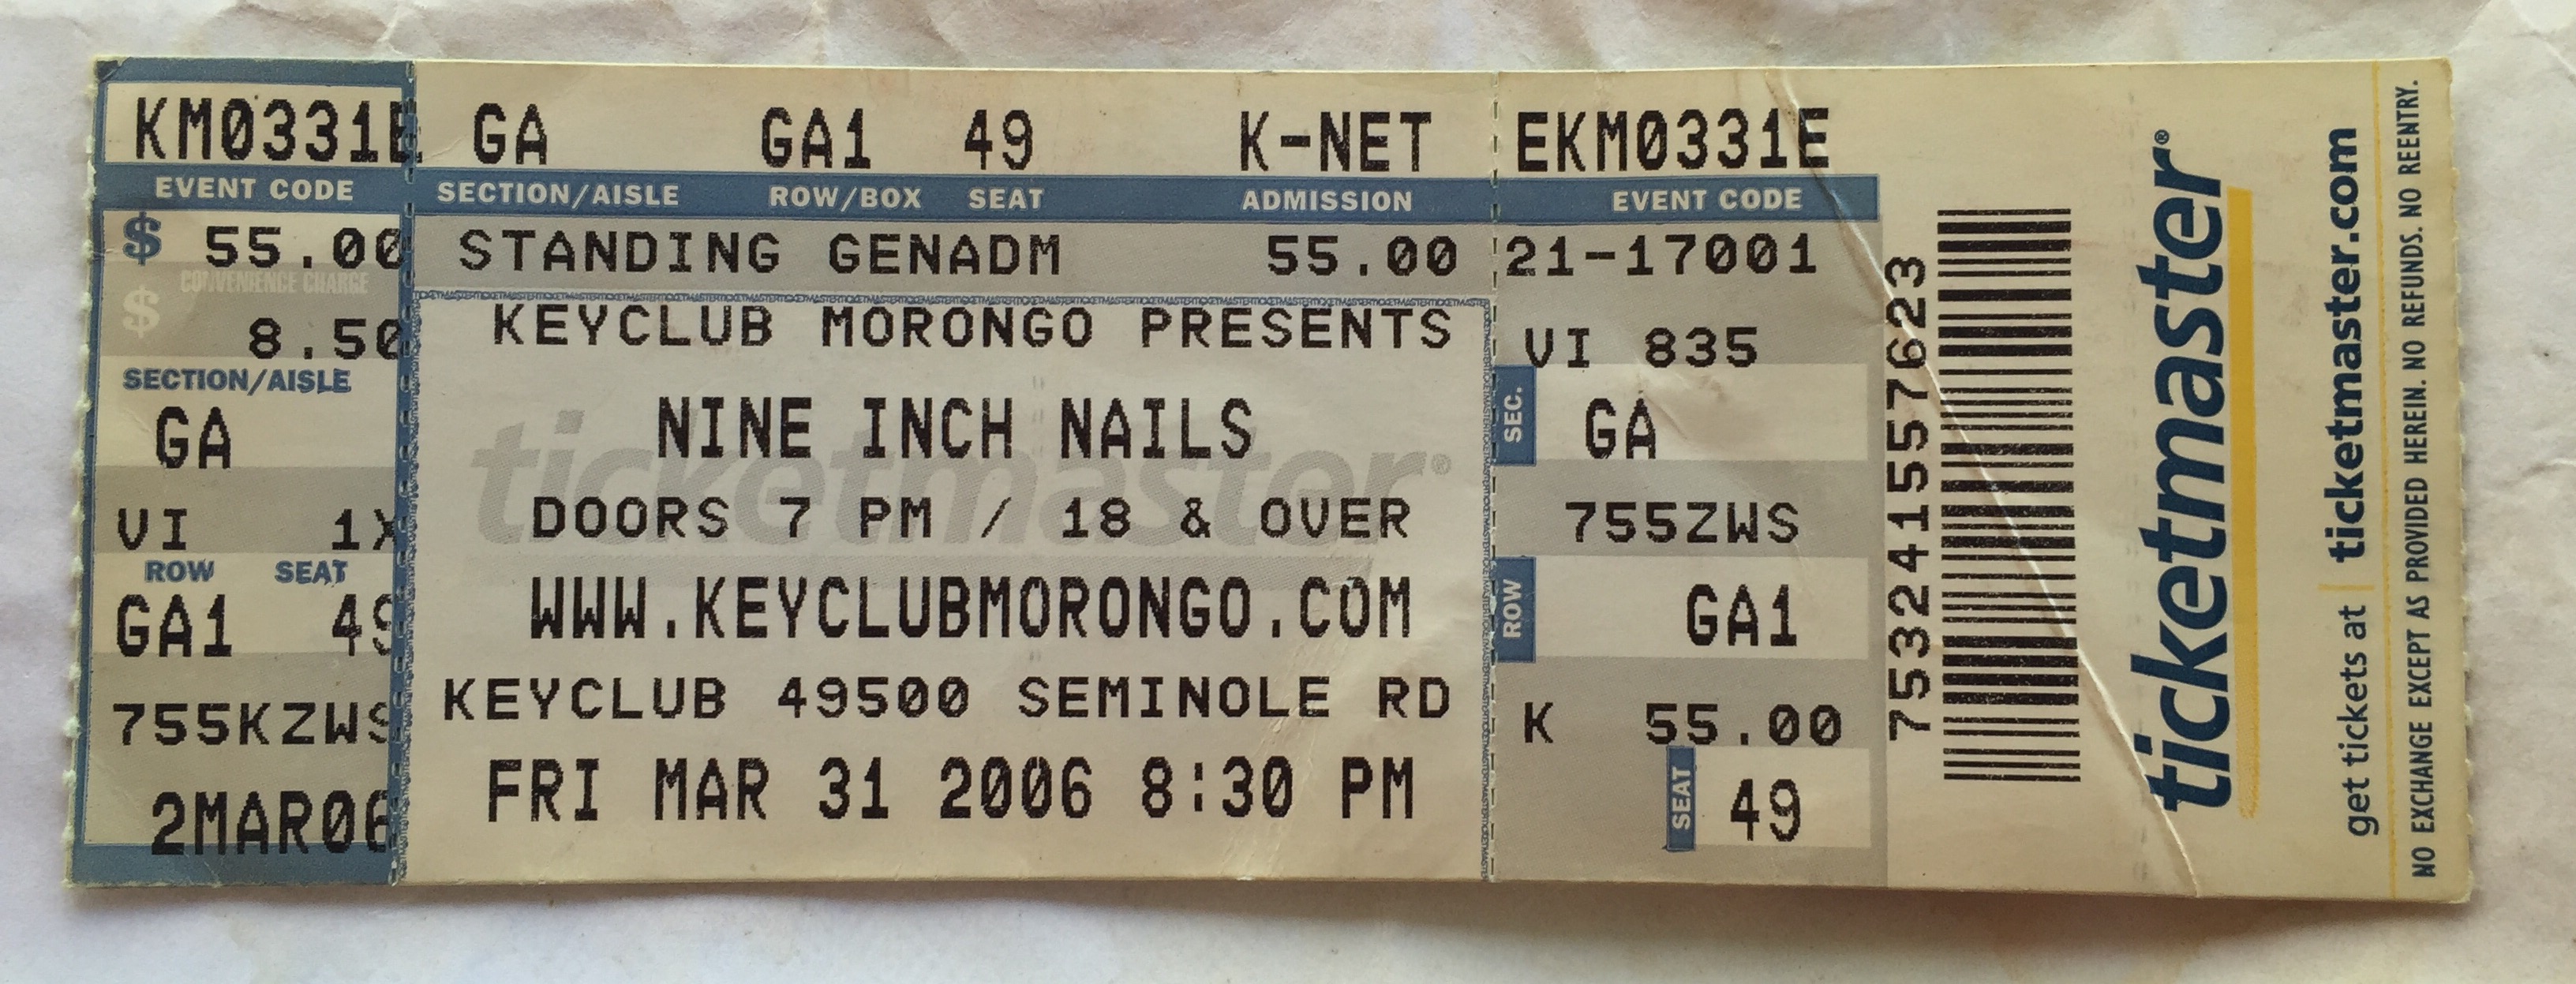 2006/03/31 Ticket